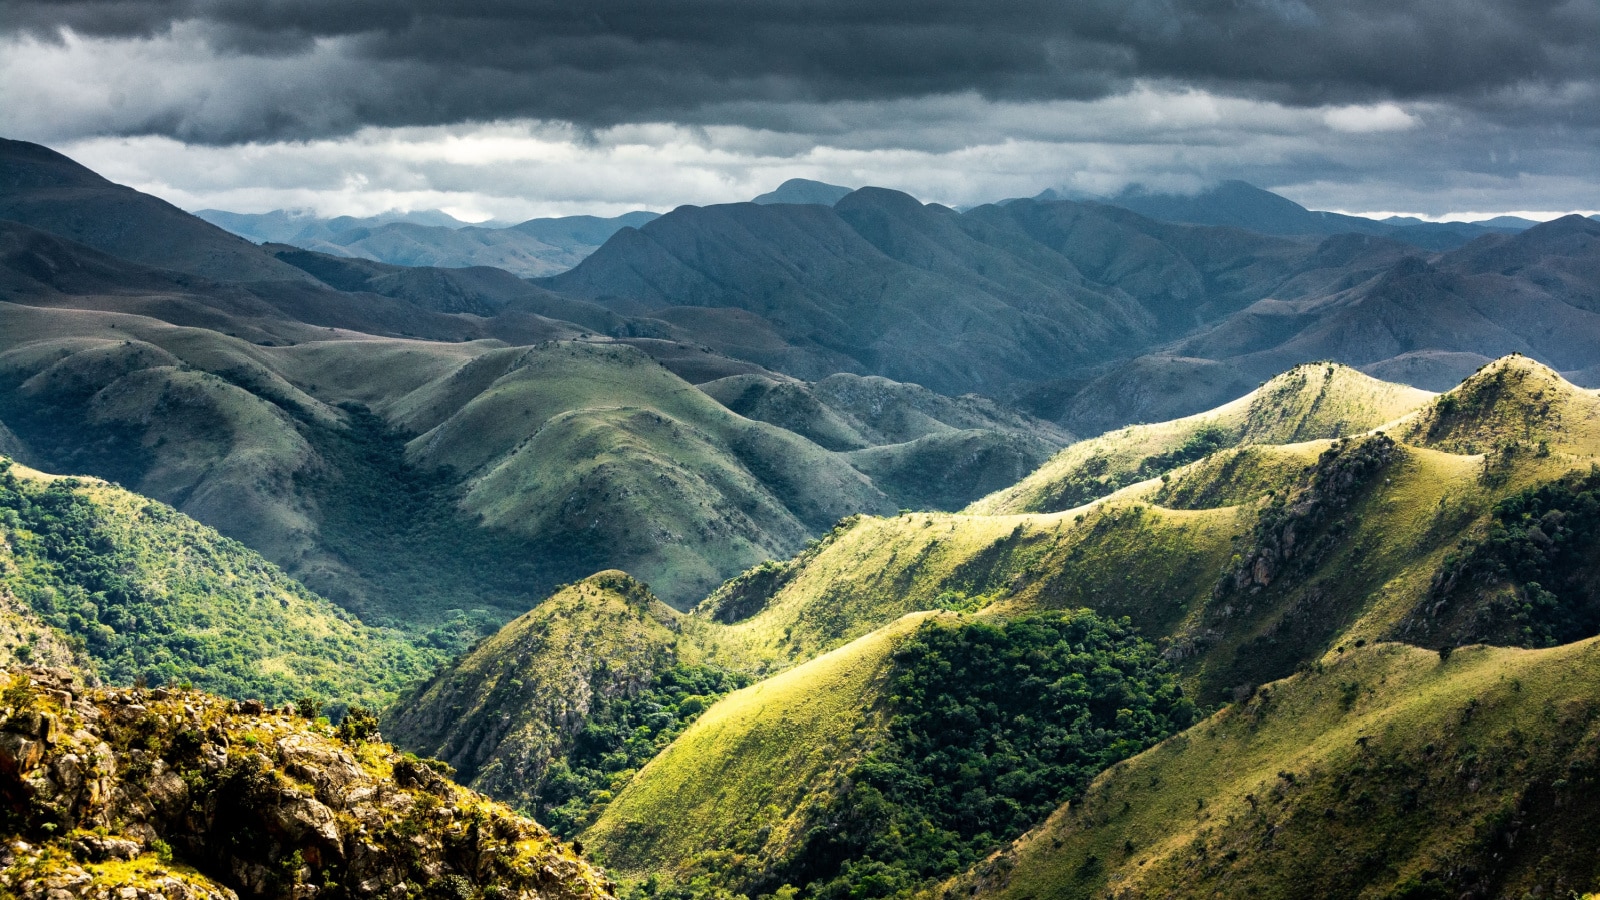 mountainous landscape of the Malolotja Nature Reserve in Swaziland (Eswatini)